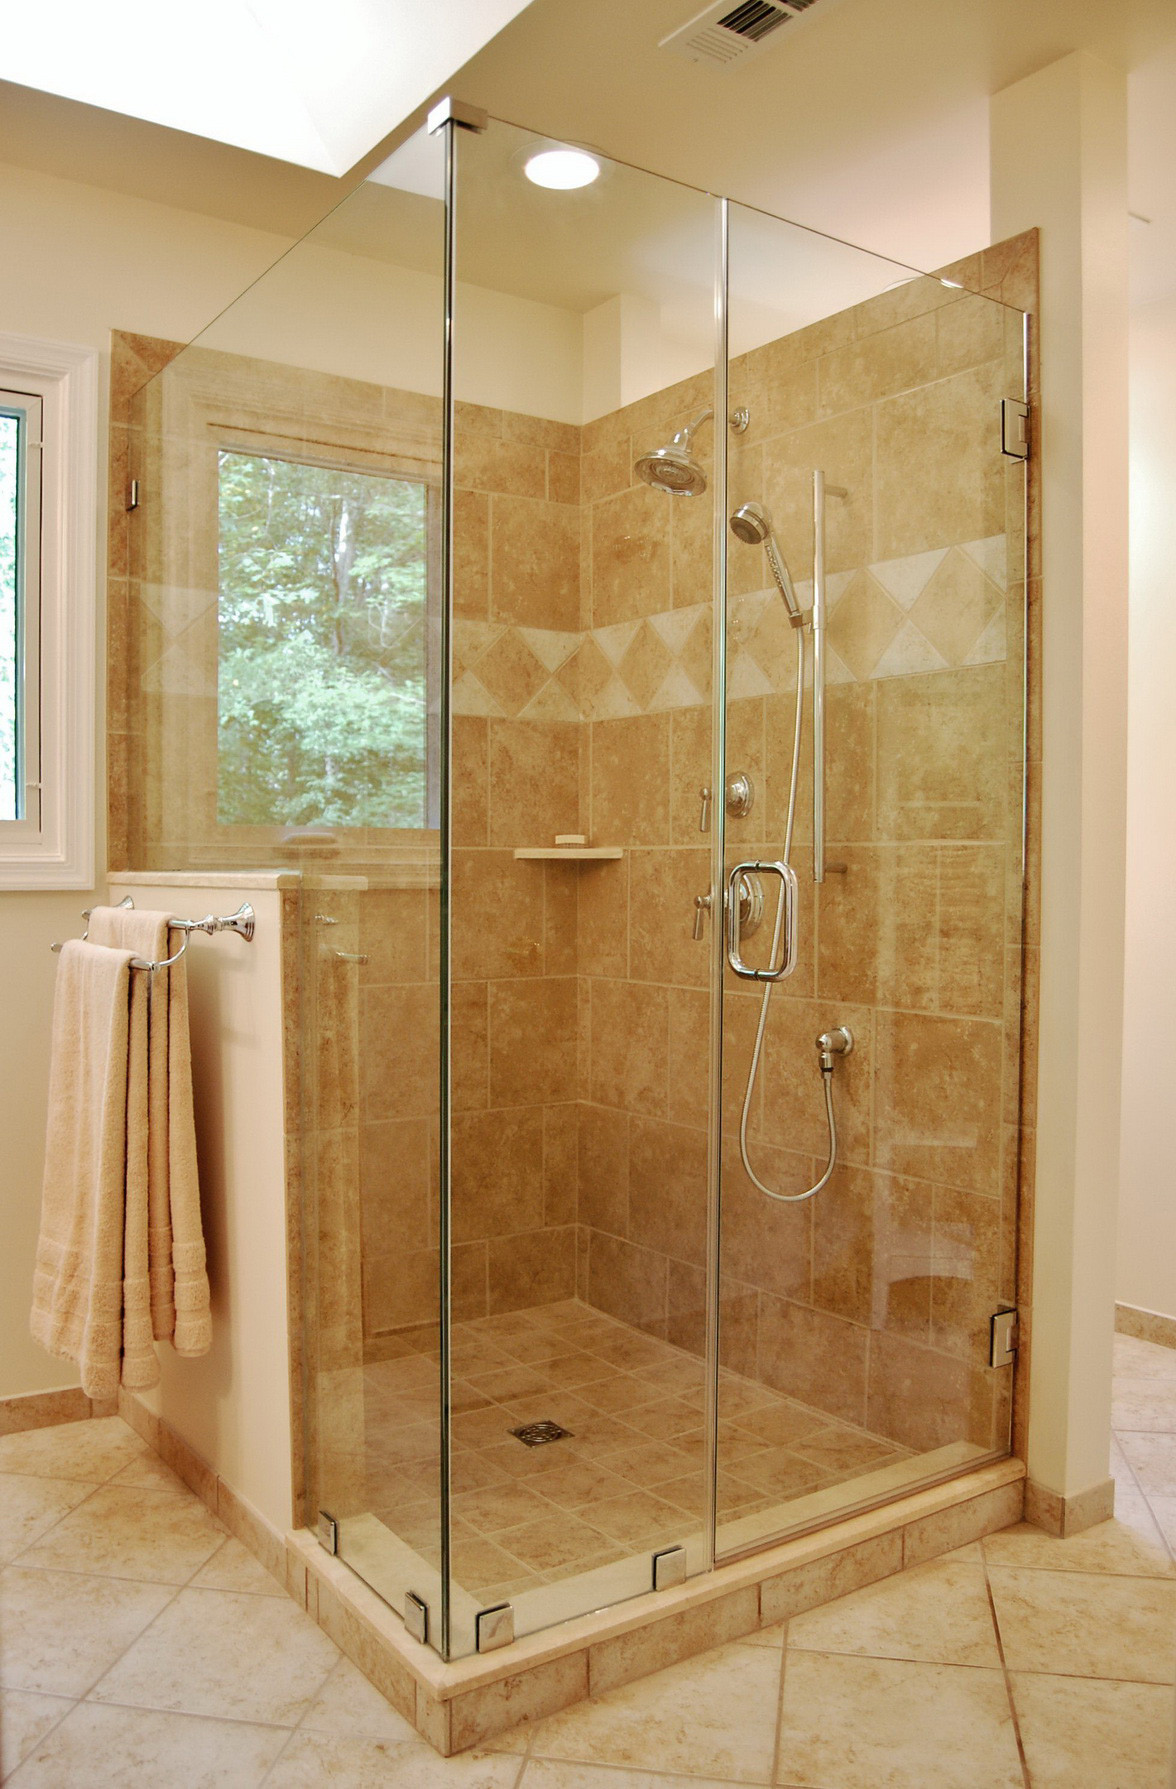 Bathroom Shower Stall Ideas
 Bathroom Exciting Shower Stall Kits For Bathroom